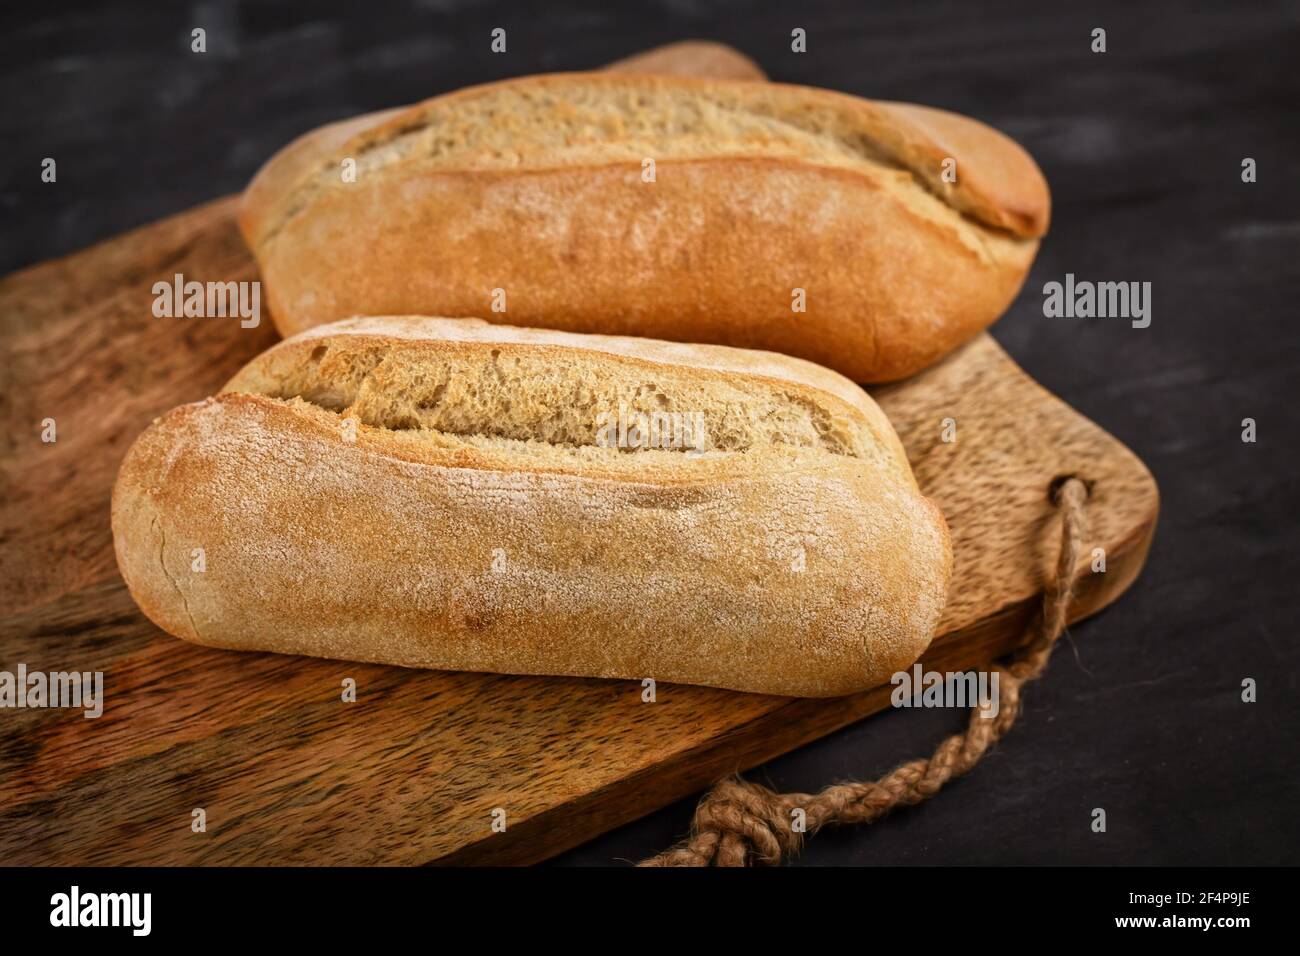 Rustic bread rolls on wooden cutting board on dark table Stock Photo